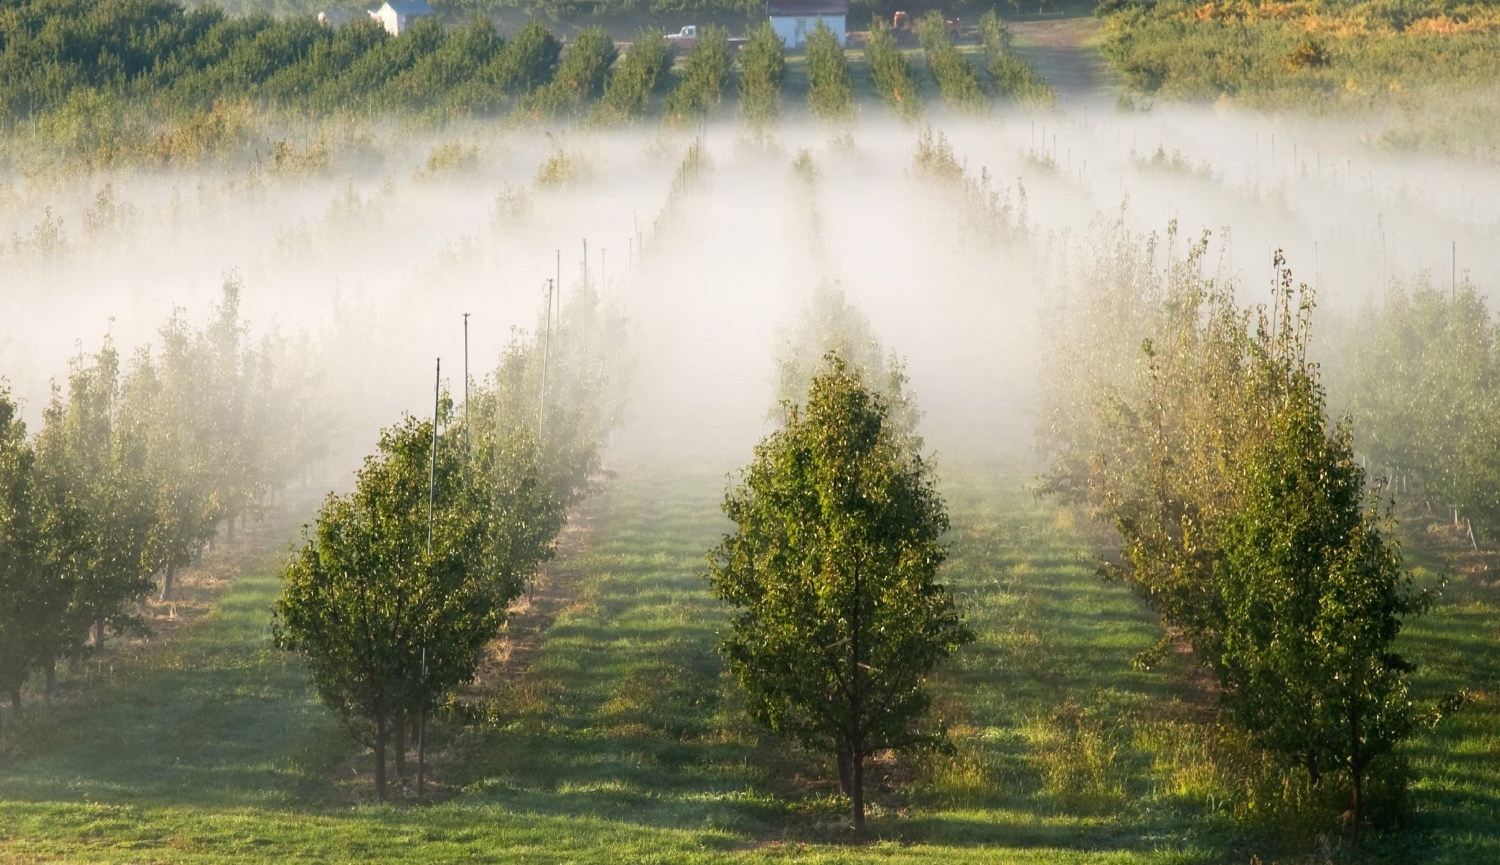 Poisoned ground: Dealing with Washington’s legacy of pesticides